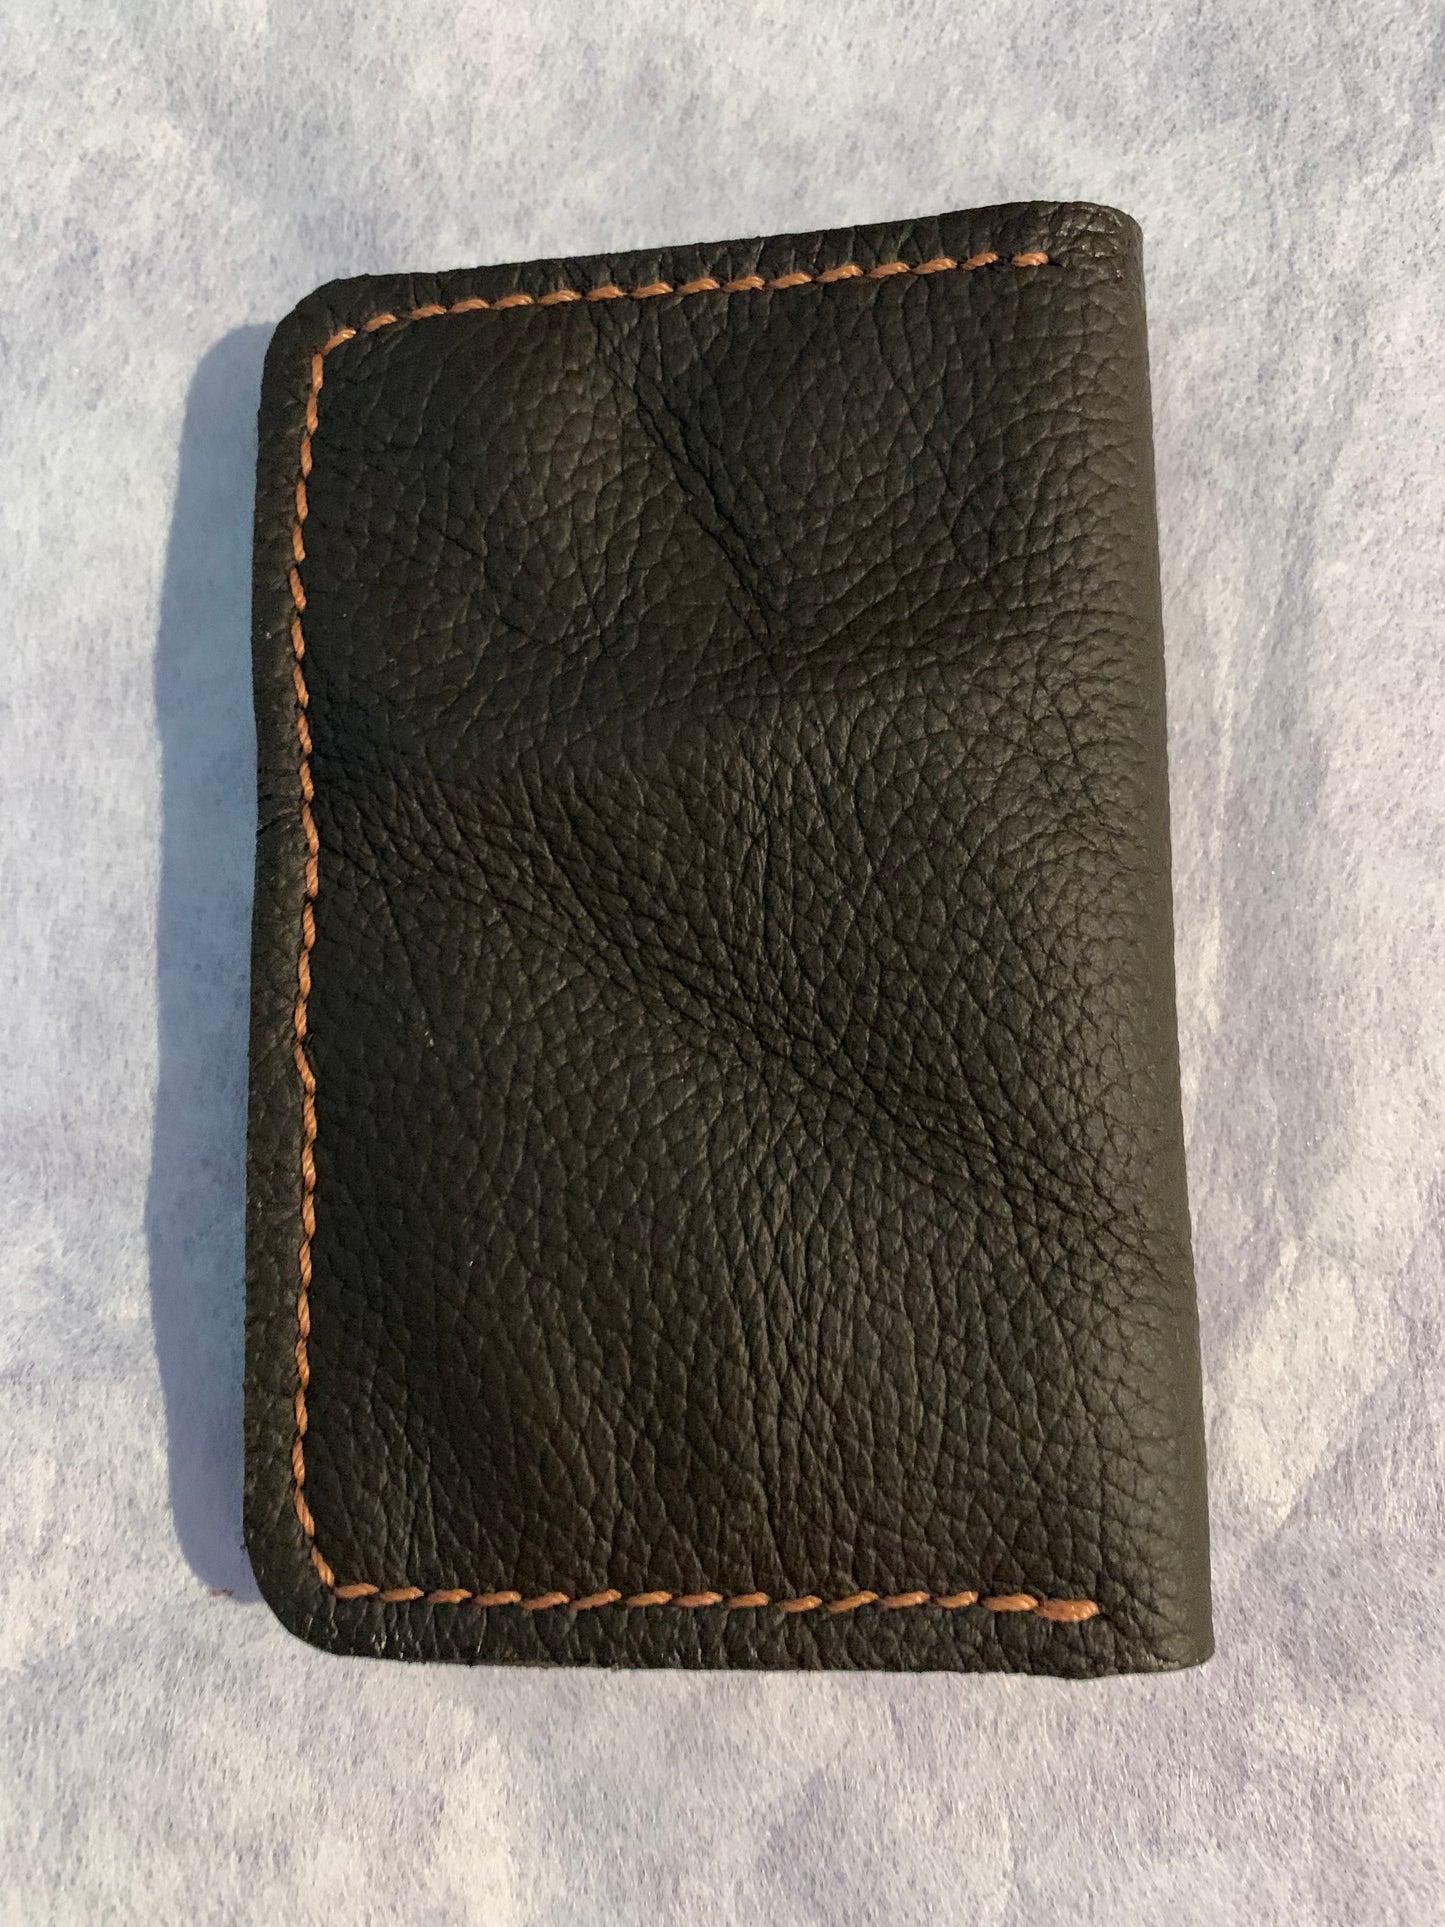 Dark brown card wallet